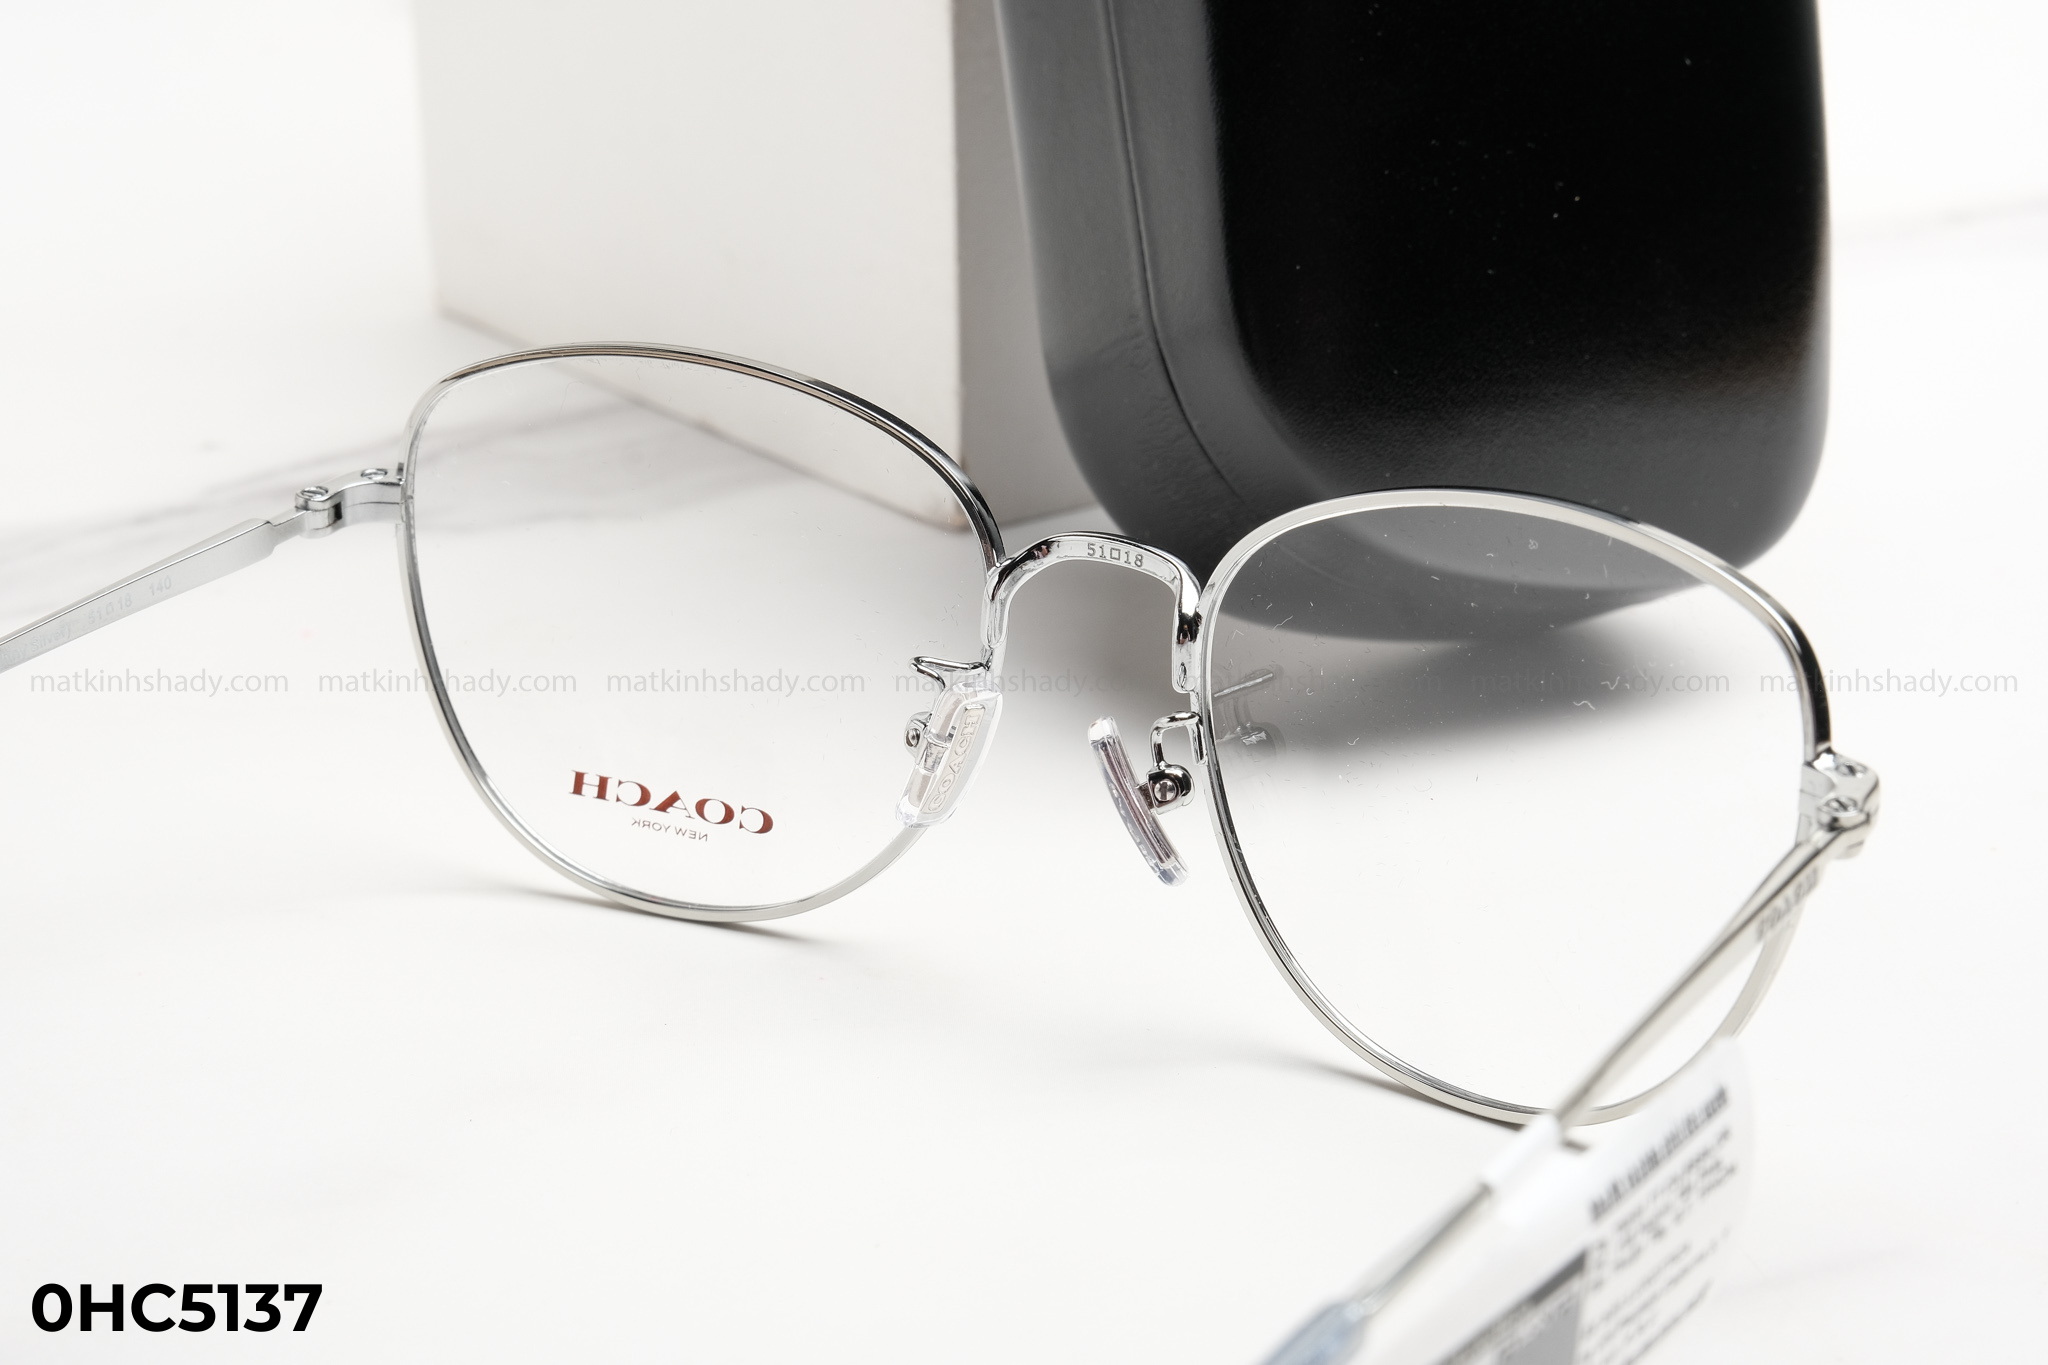  Coach Eyewear - Glasses - 0HC5137 